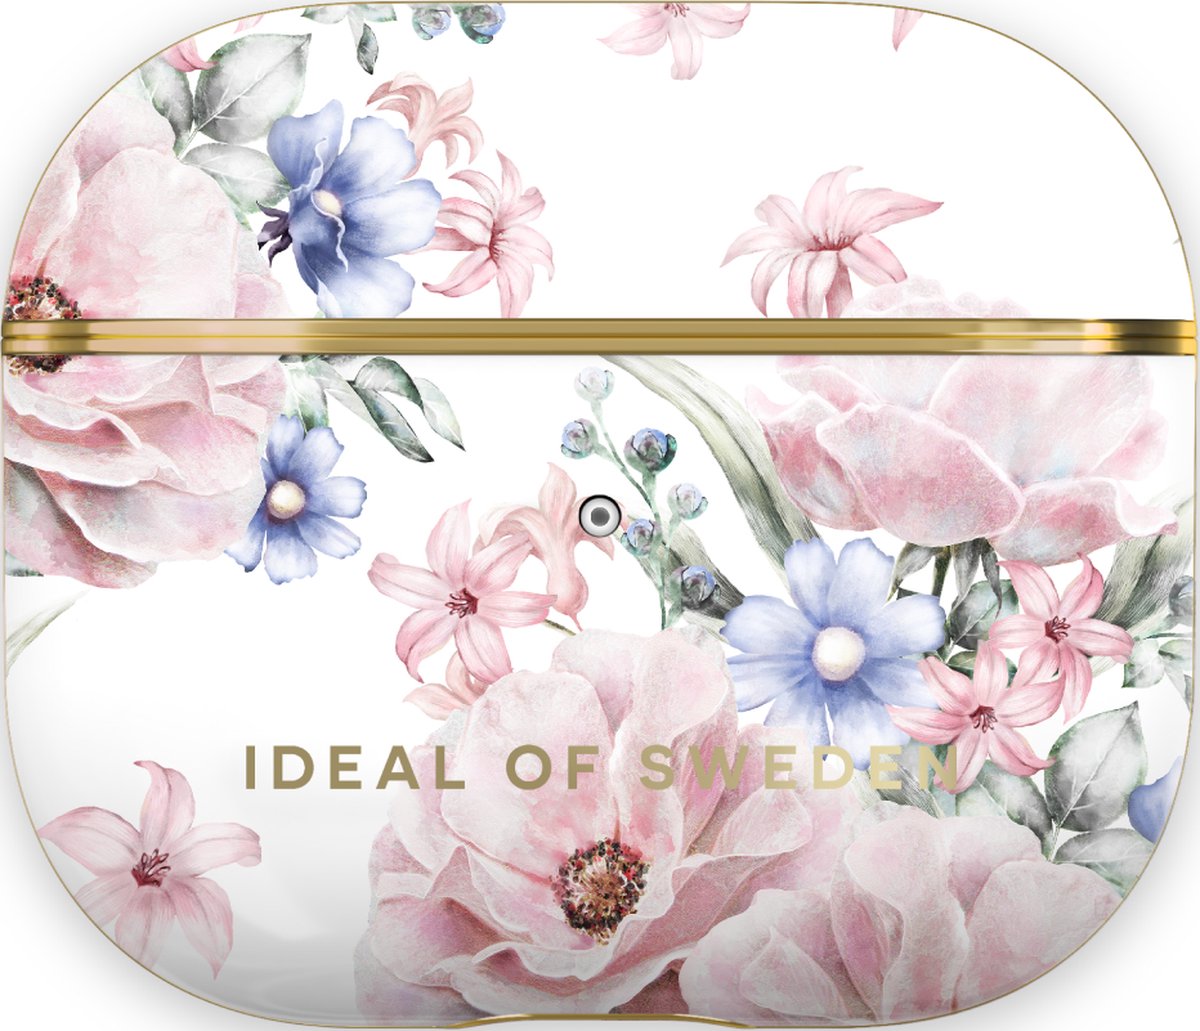 iDeal of Sweden AirPods Case Print Gen 3 Floral Romance